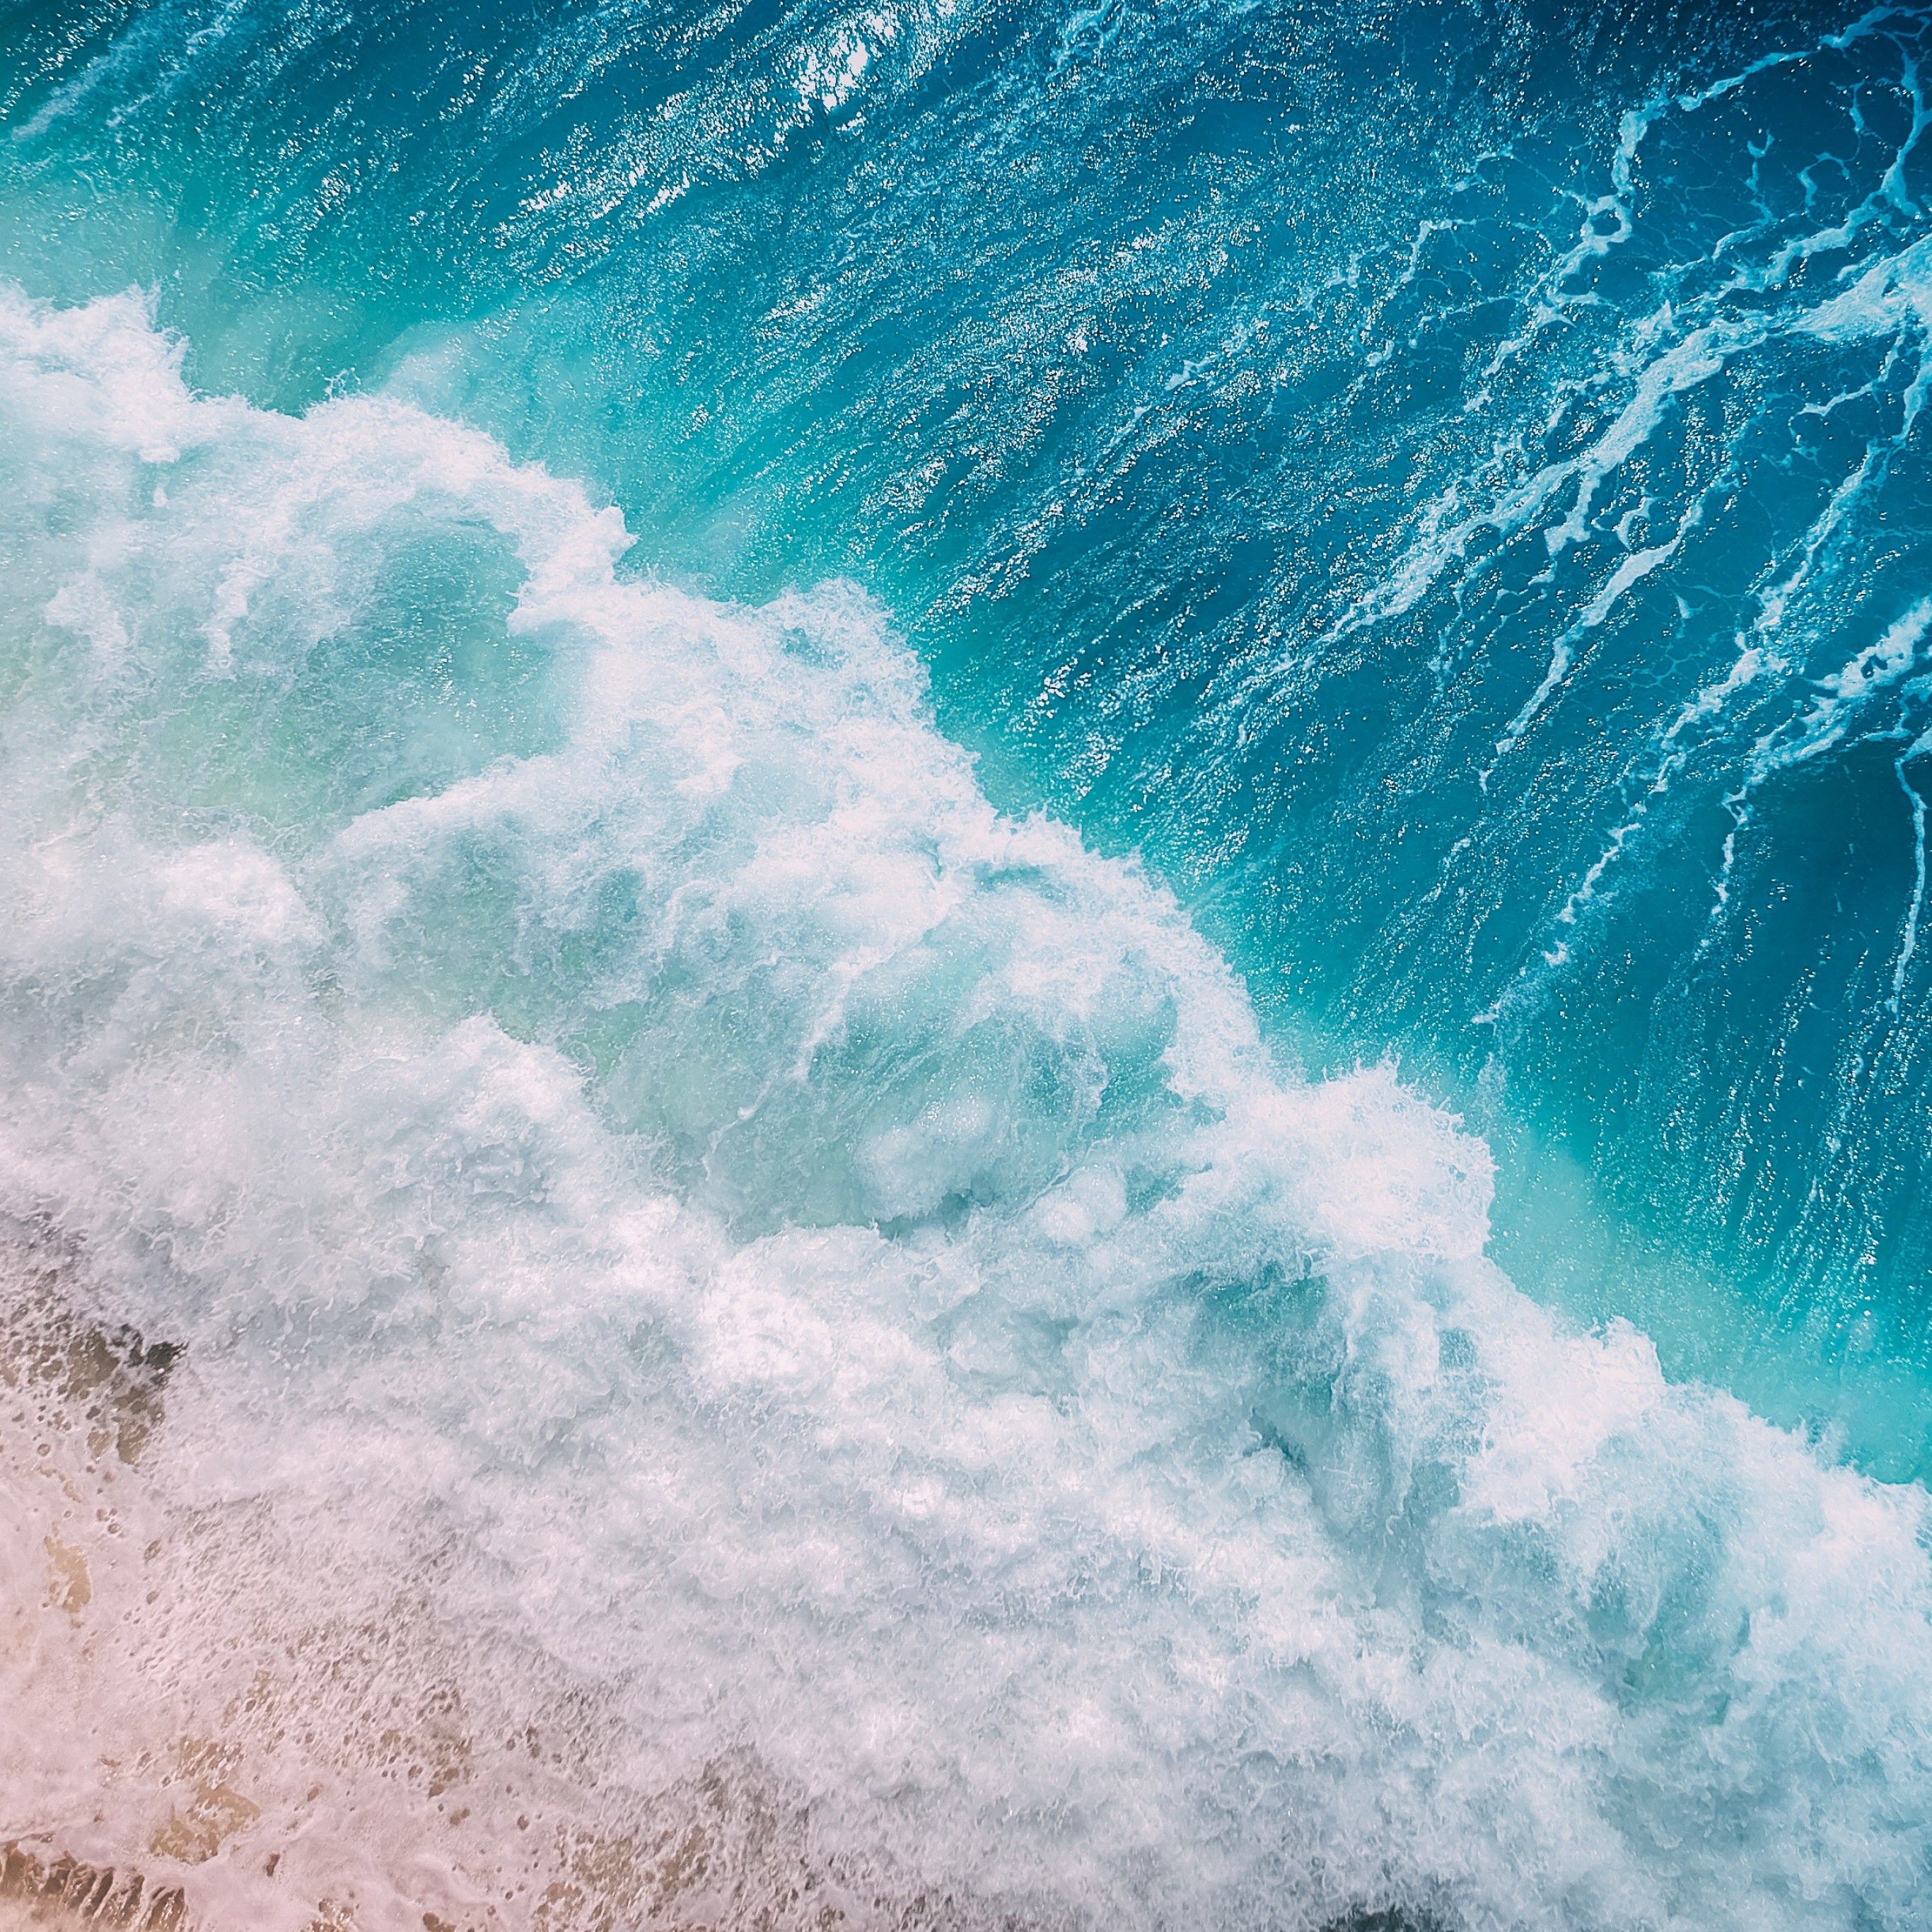 Ocean Waves 4K Wallpaper, Aerial view, Ocean, Water, Drone photo, Nature